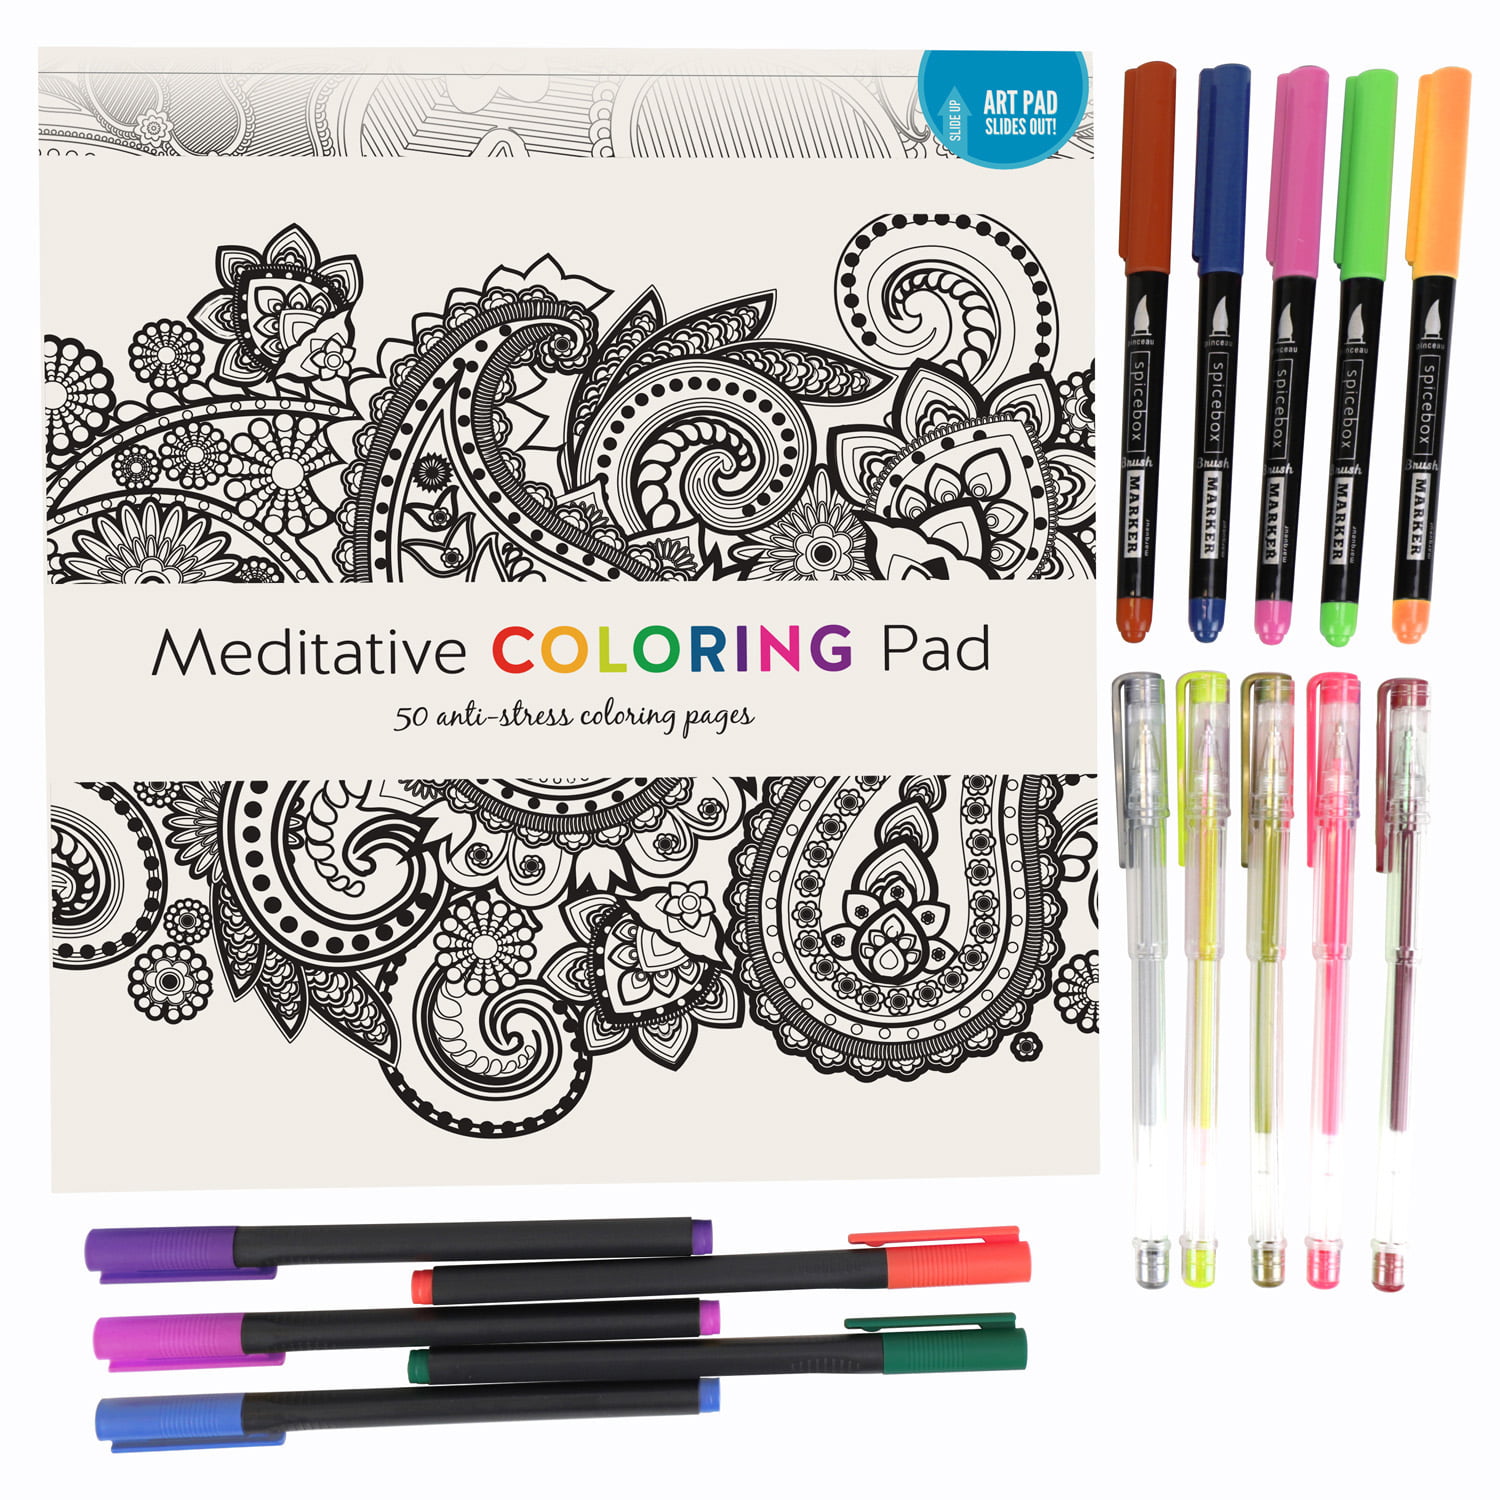 SpiceBox Adult Art Craft & Hobby Kits Masterclass Sketching, Multi Colors  (10024)